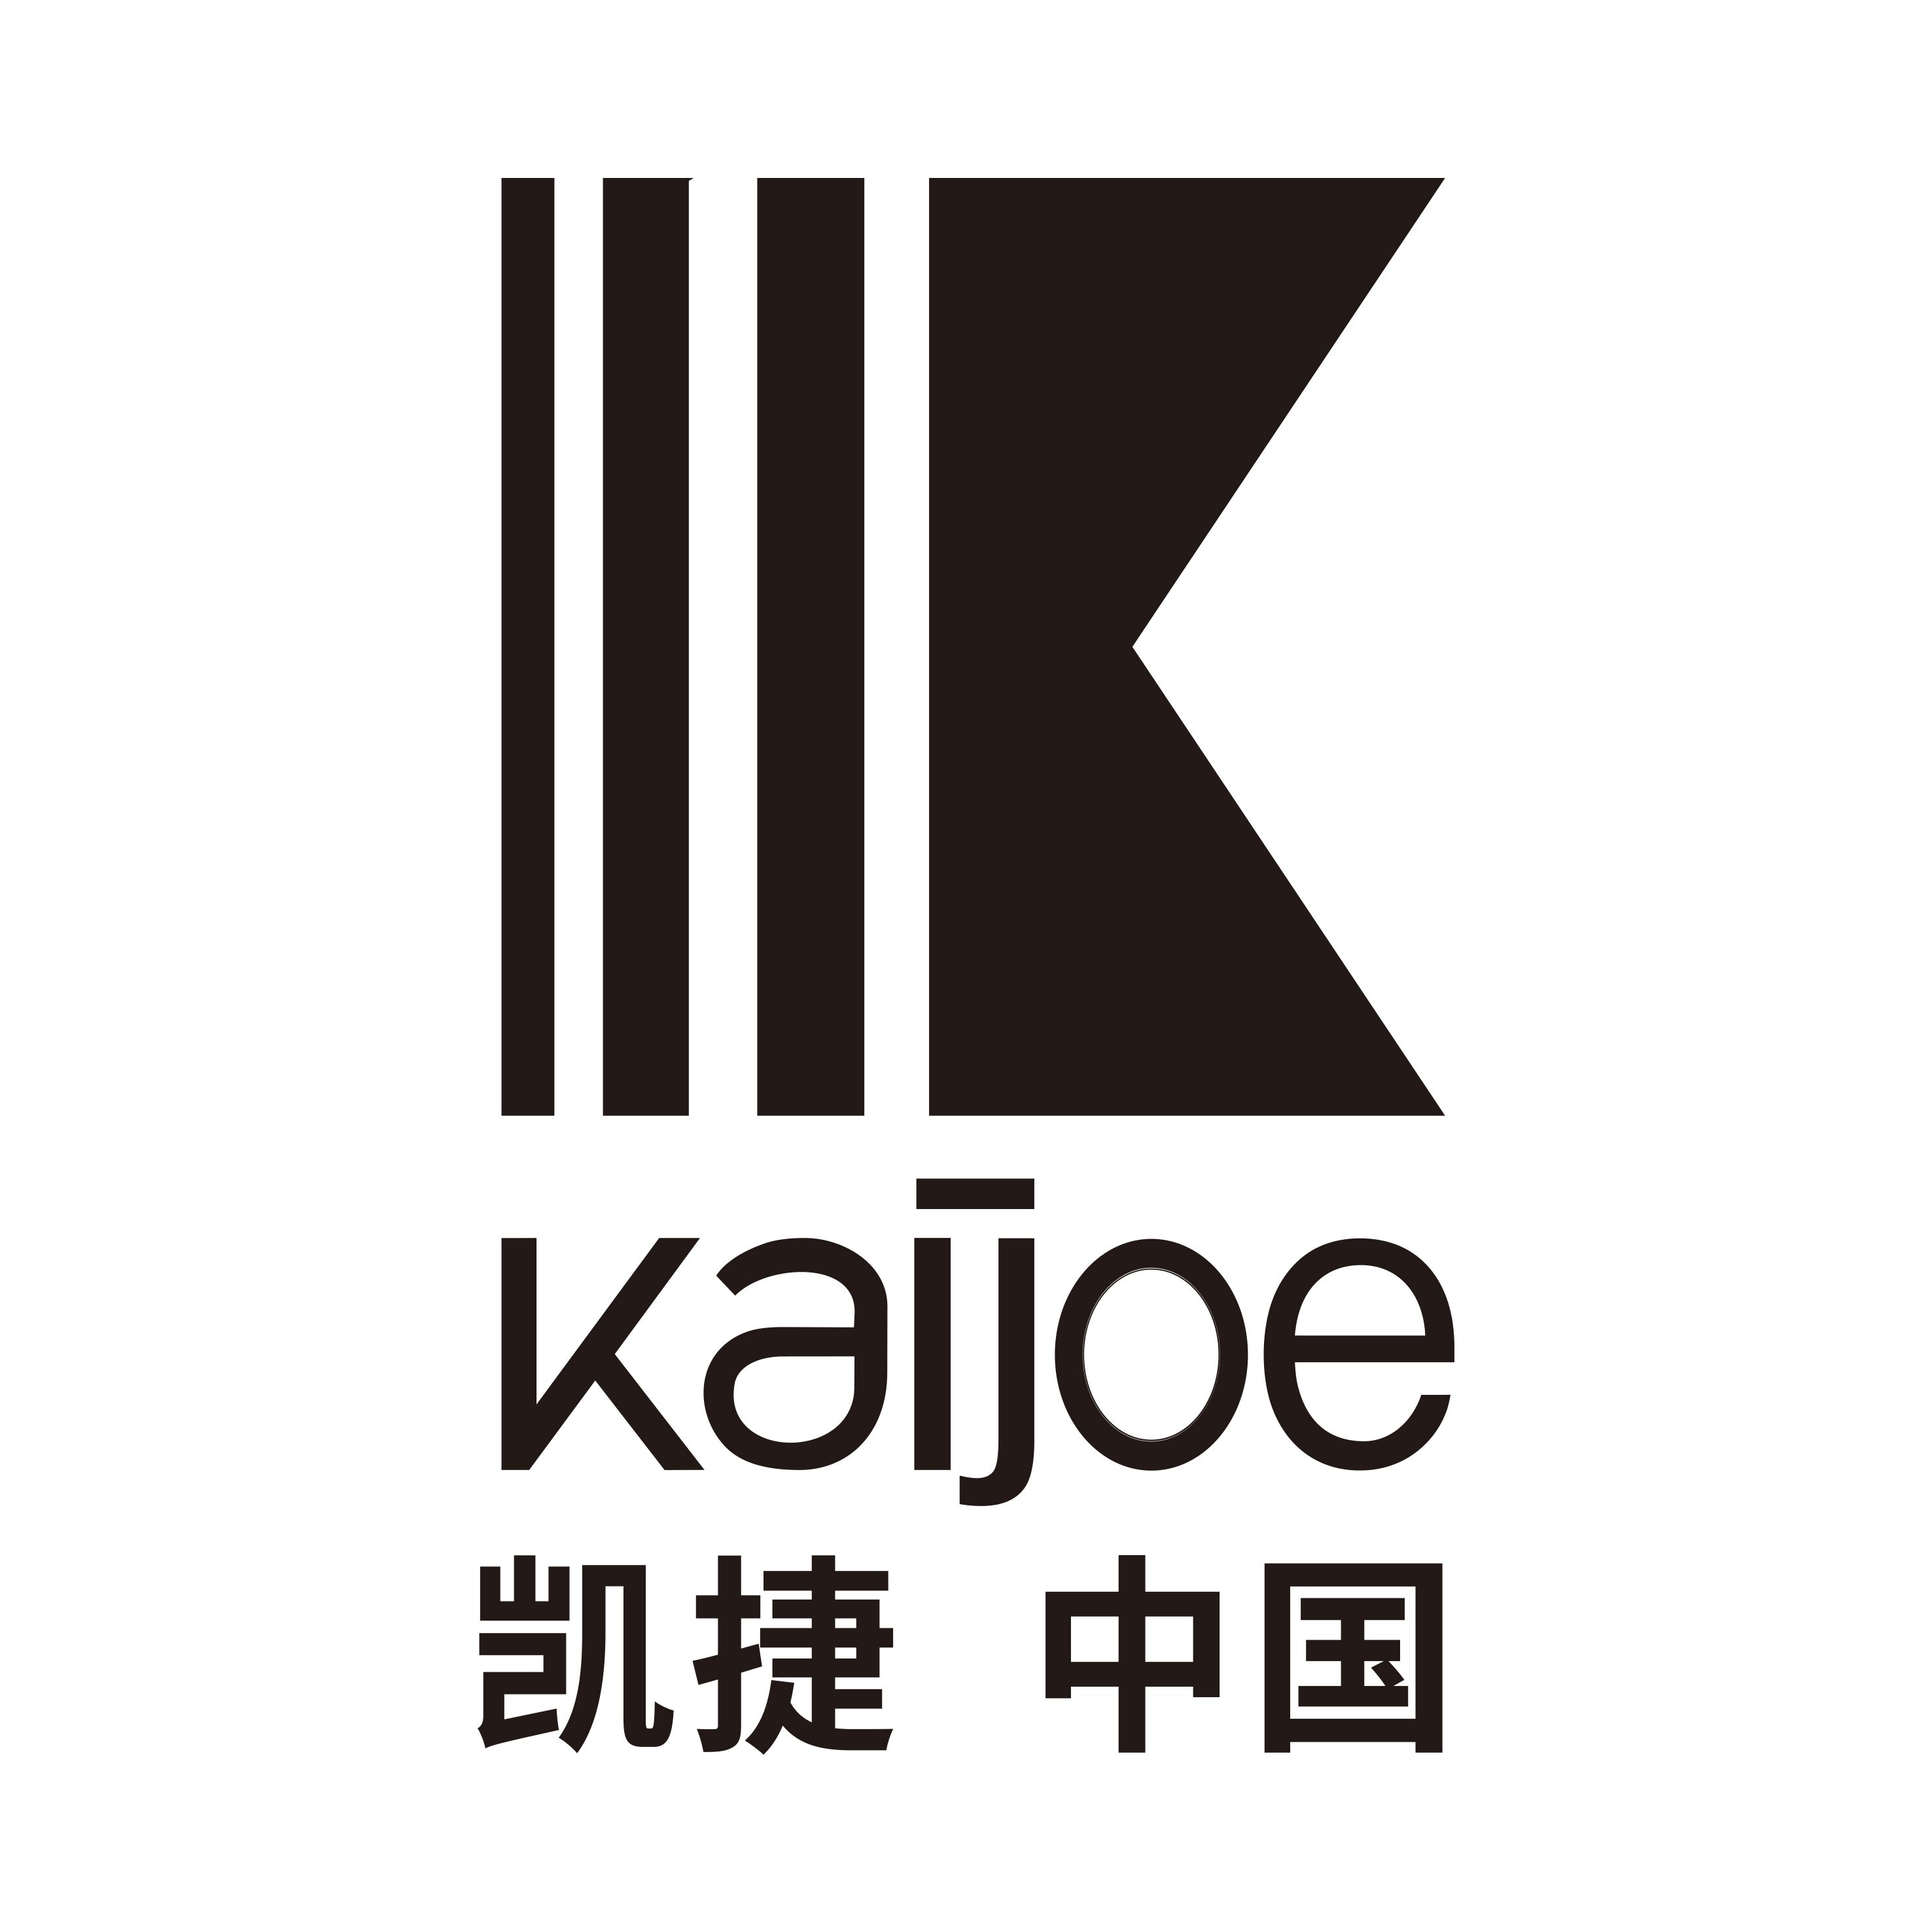 Zhaoqing Kaijoe Technology Co., Ltd.